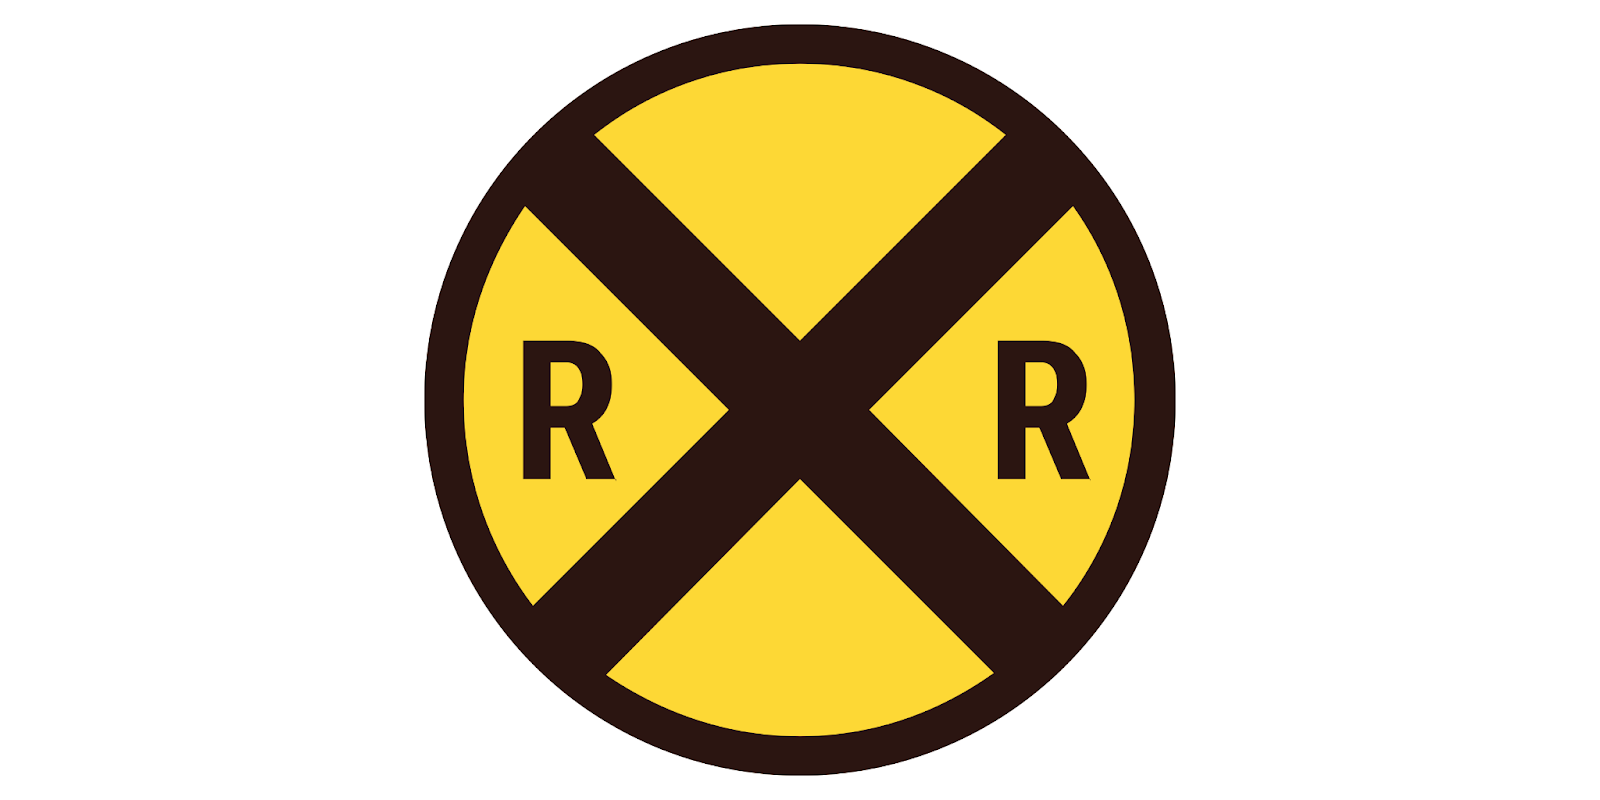 round yellow warning sign